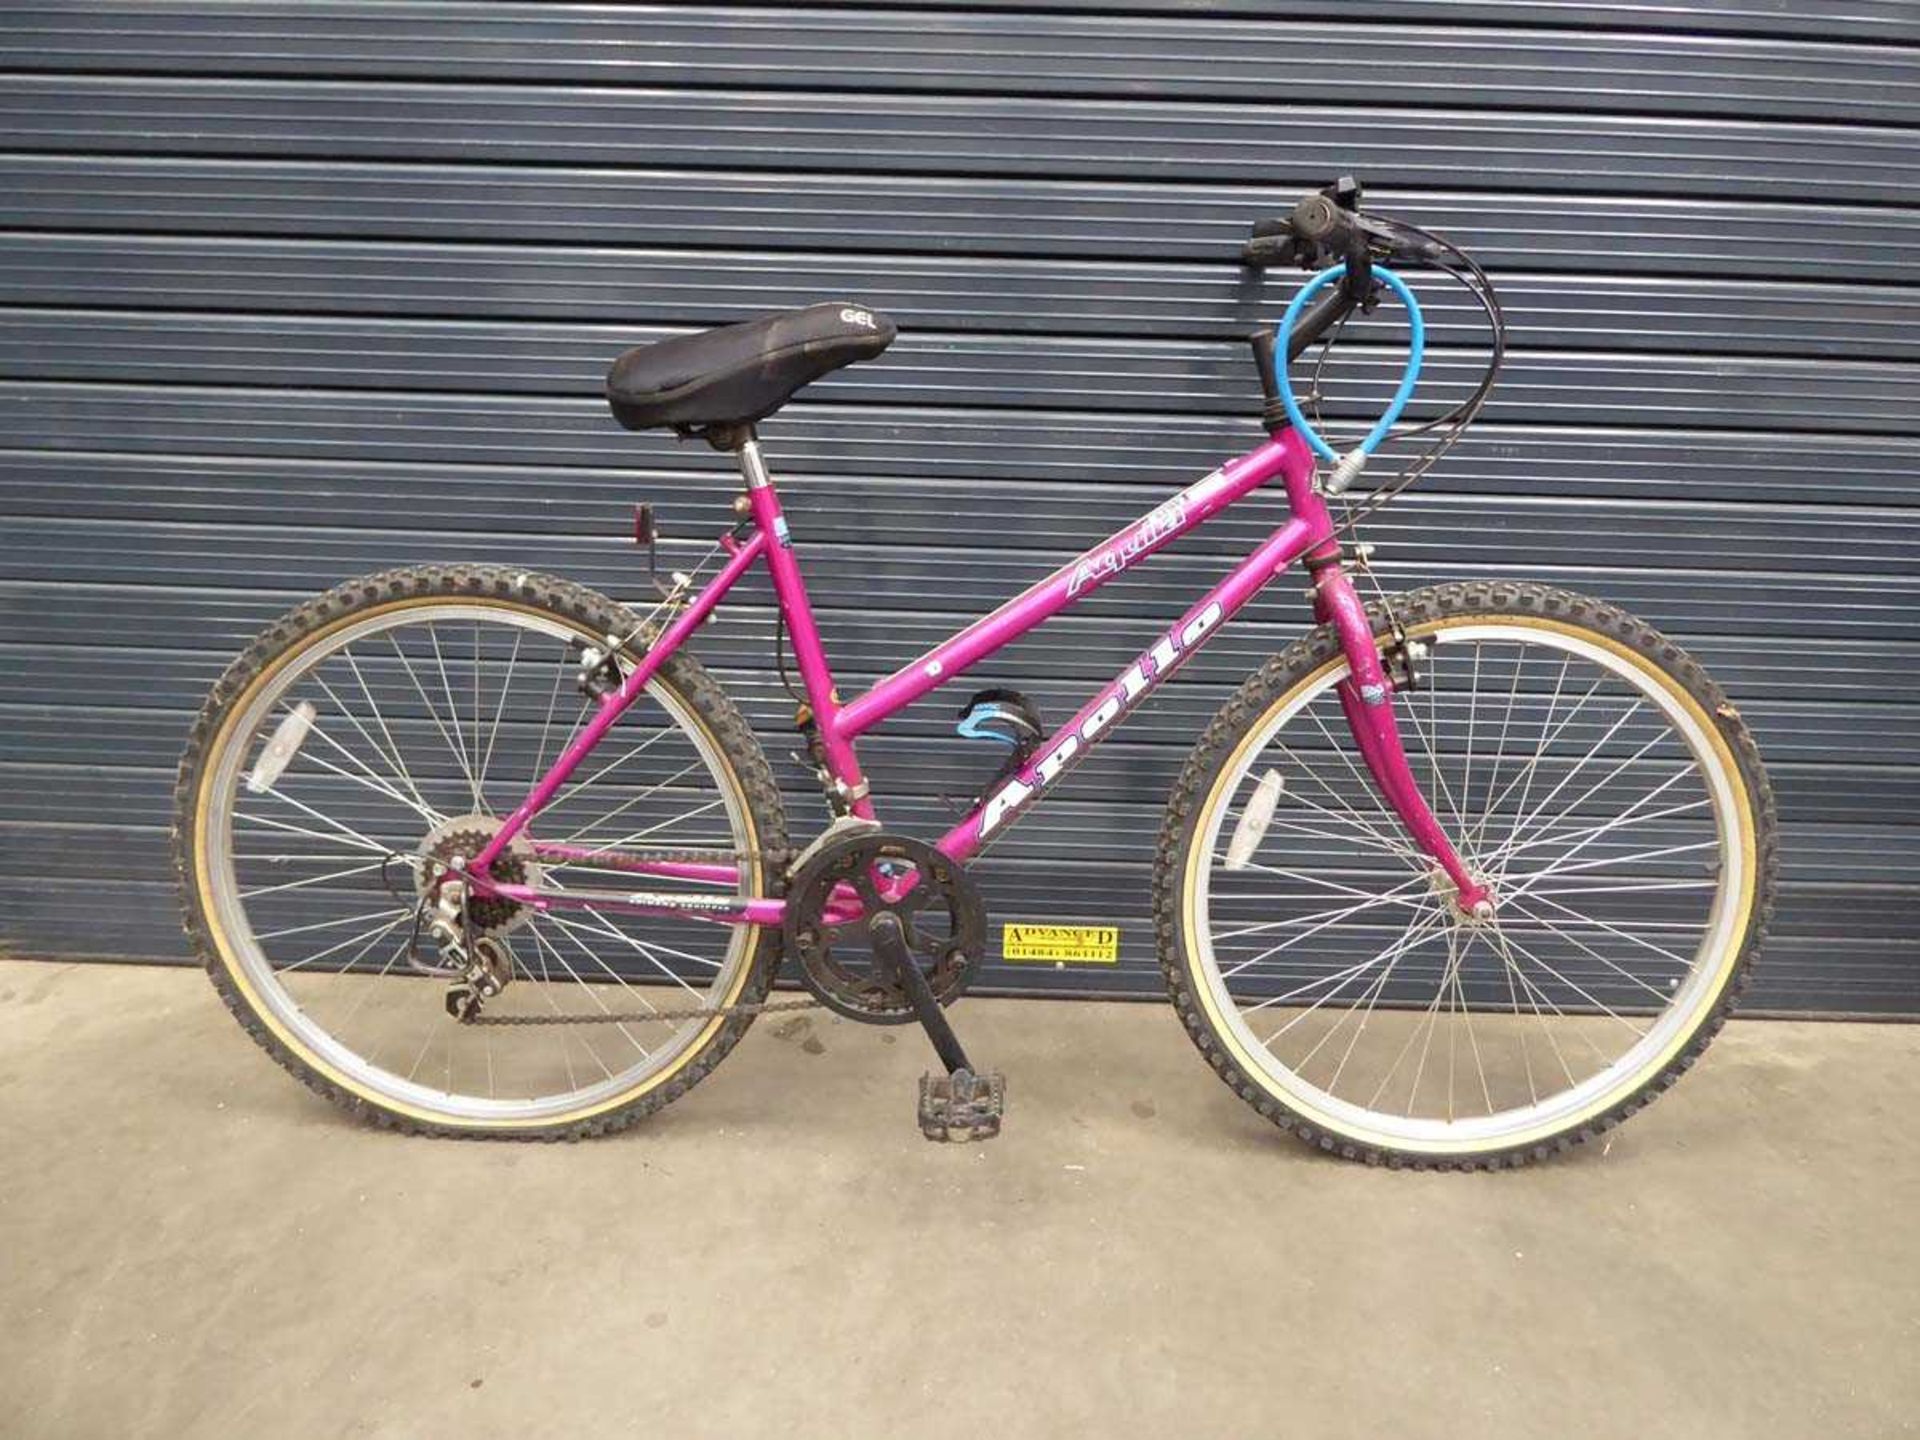 Pink Apollo girls bike